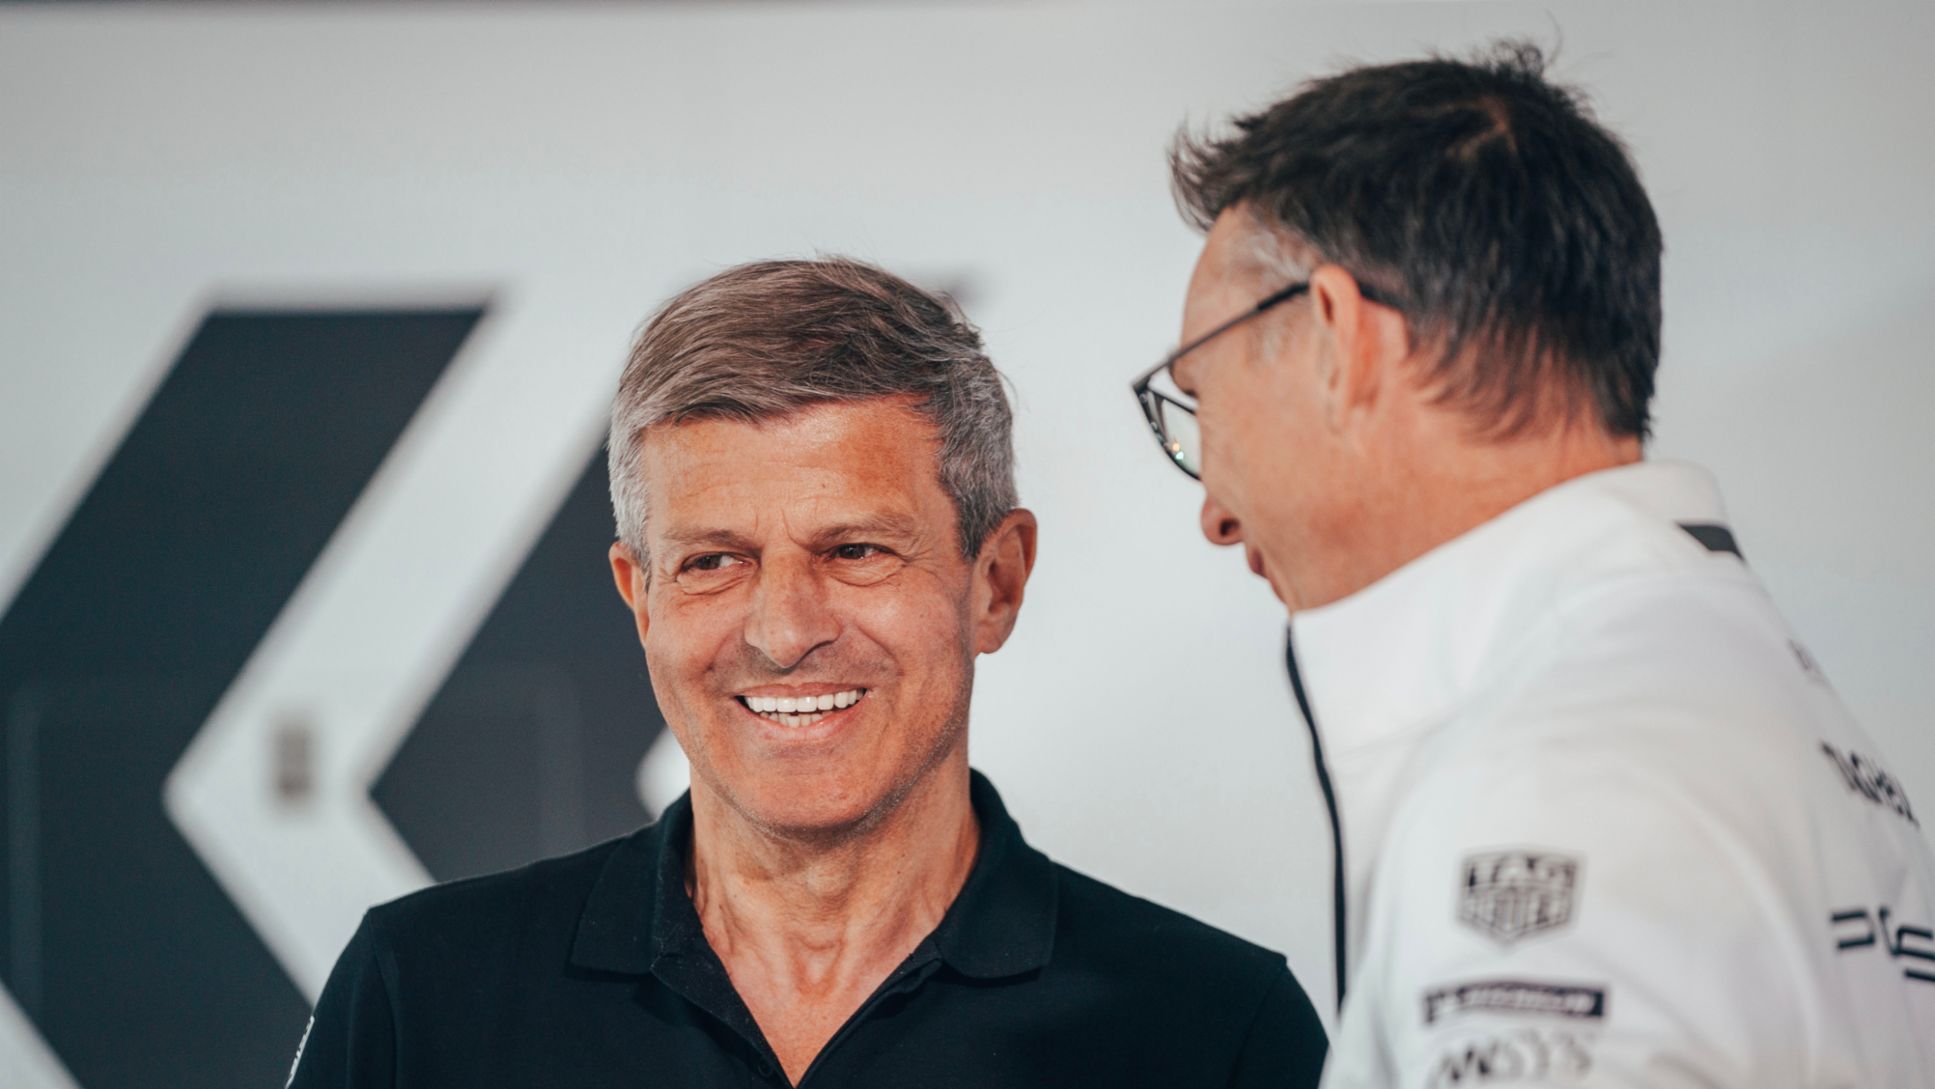 Fritz Enzinger, Vice President Porsche Motorsport, Amiel Lindesay, Head of Operations Formula E, l-r, 2021, Porsche AG